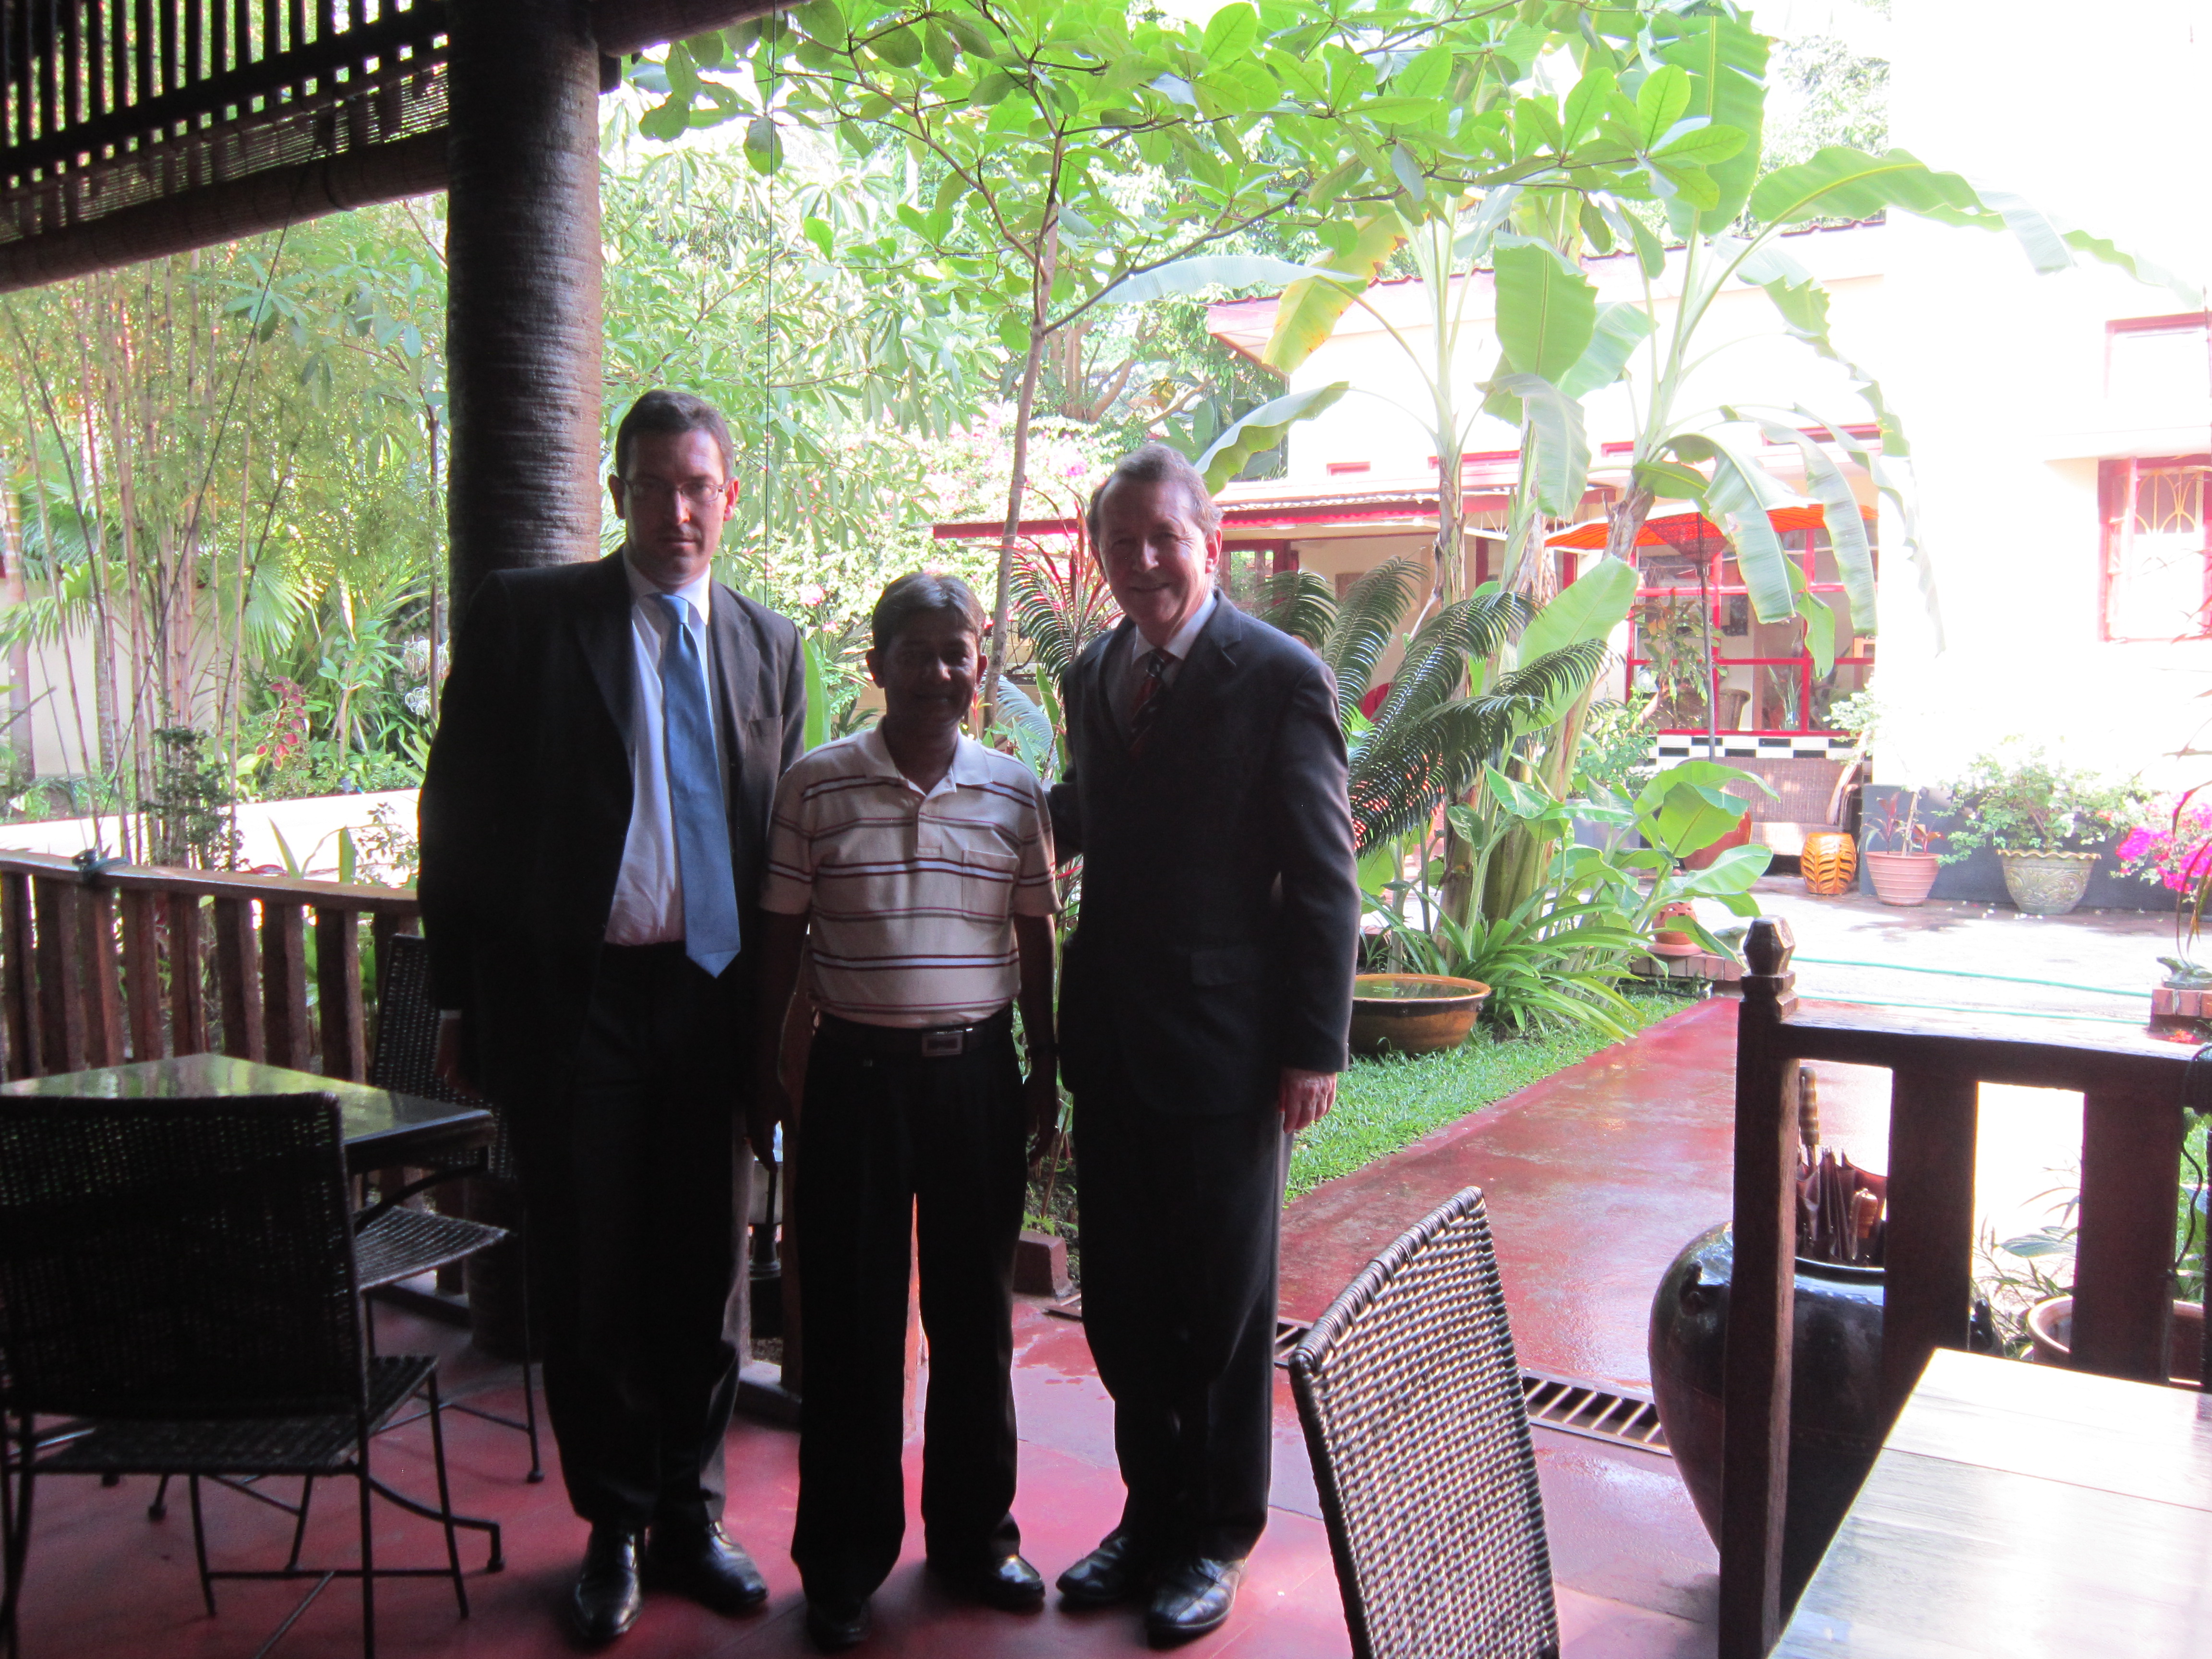 Meeting with Rohynga representatives in Rangoon